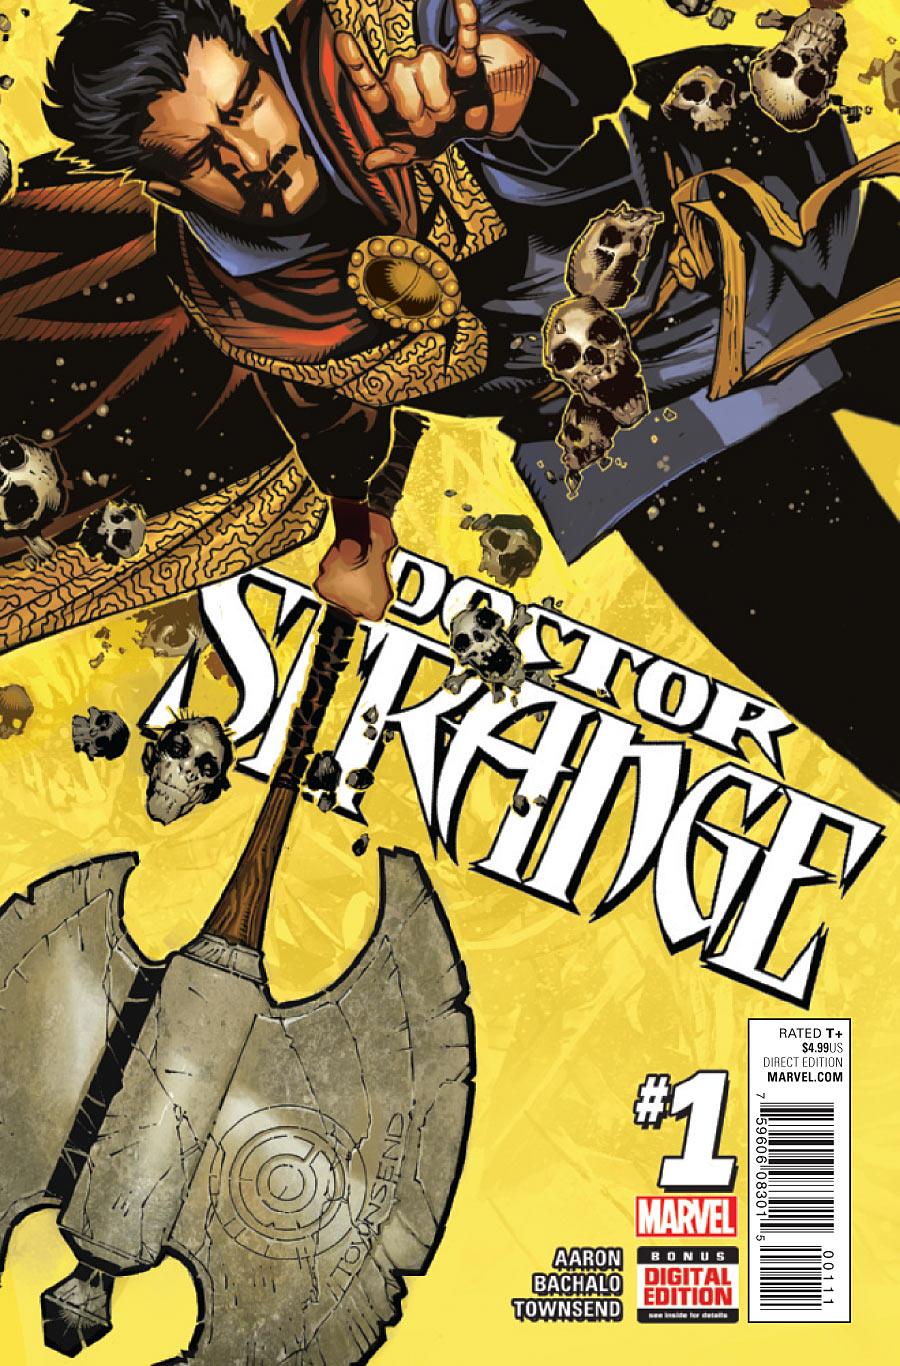 Doctor Strange Vol. 4 #1